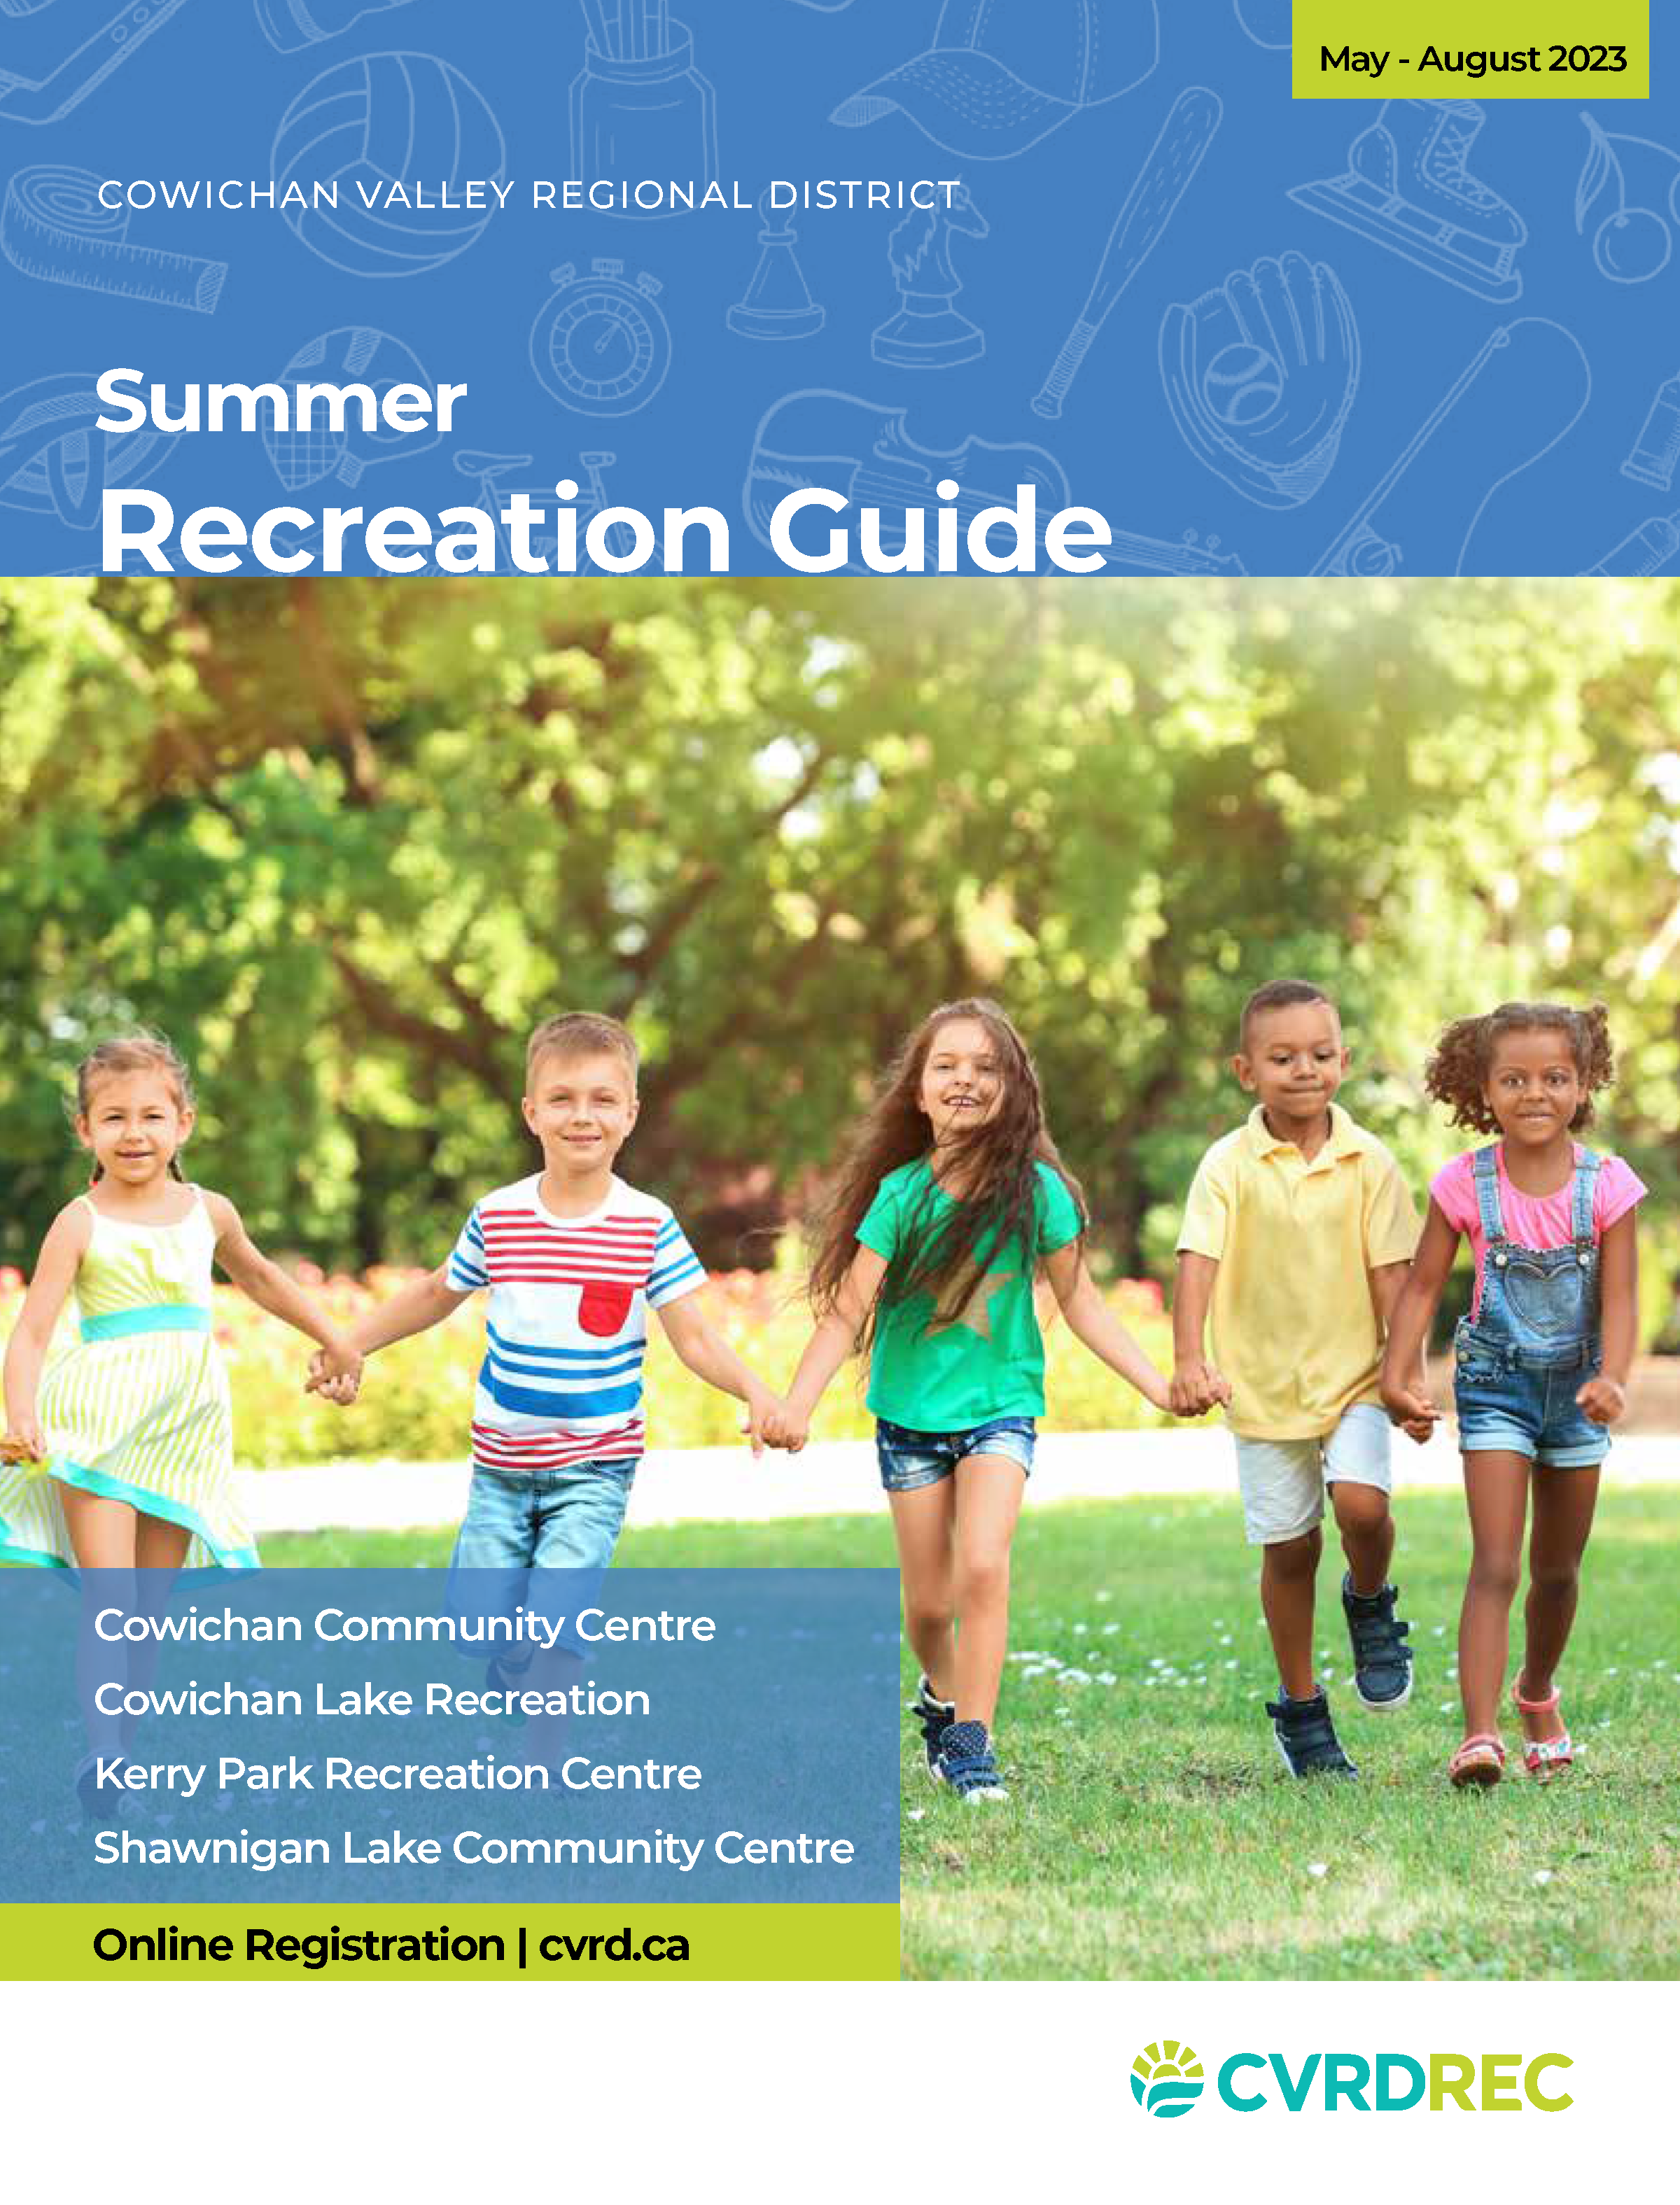 CVRD - Recreation Guide - Summer 2023